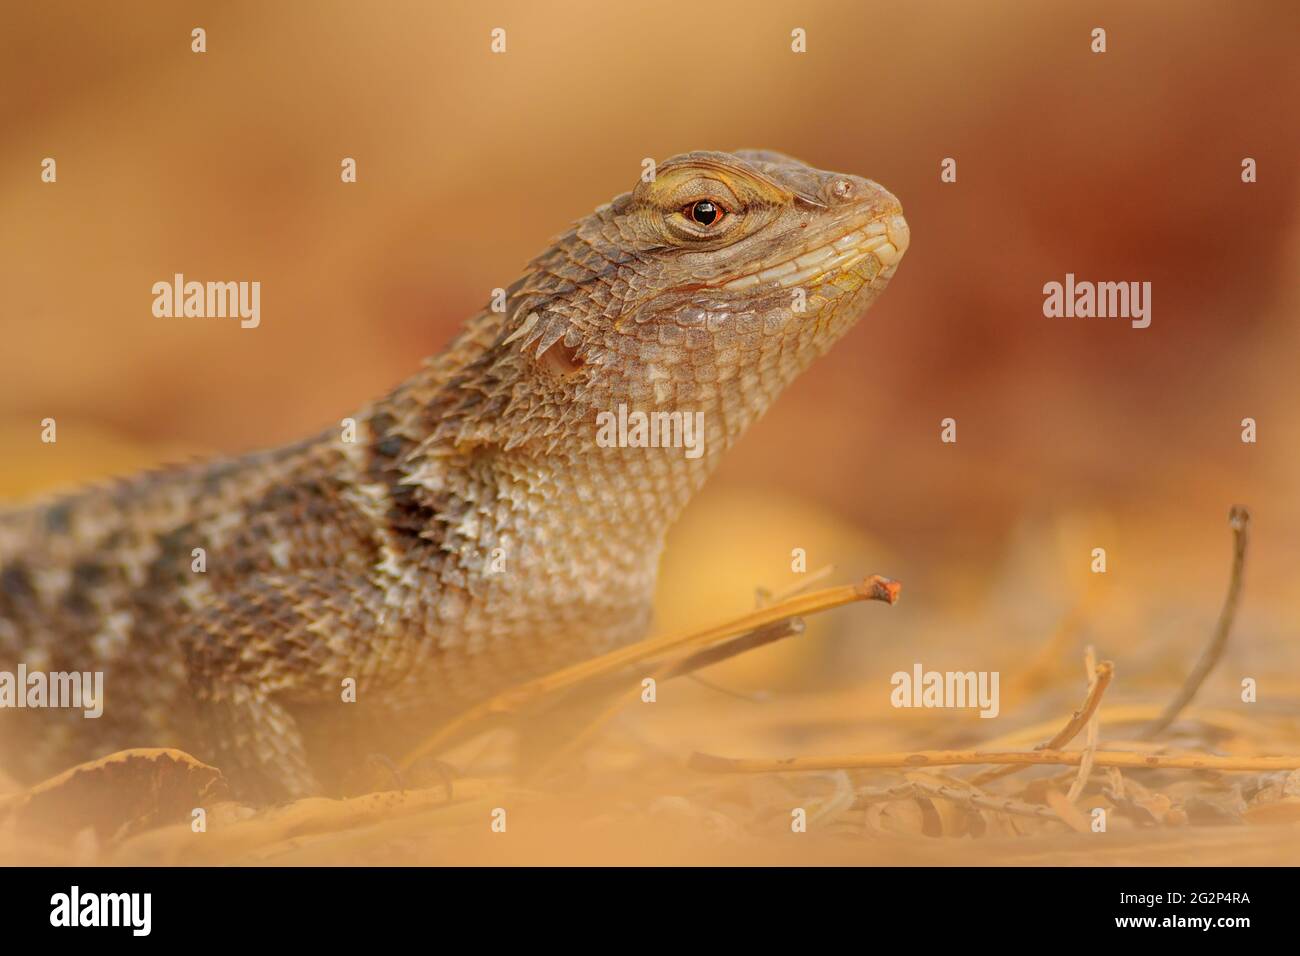 A portrait of a Desert Spiny Lizard. Stock Photo